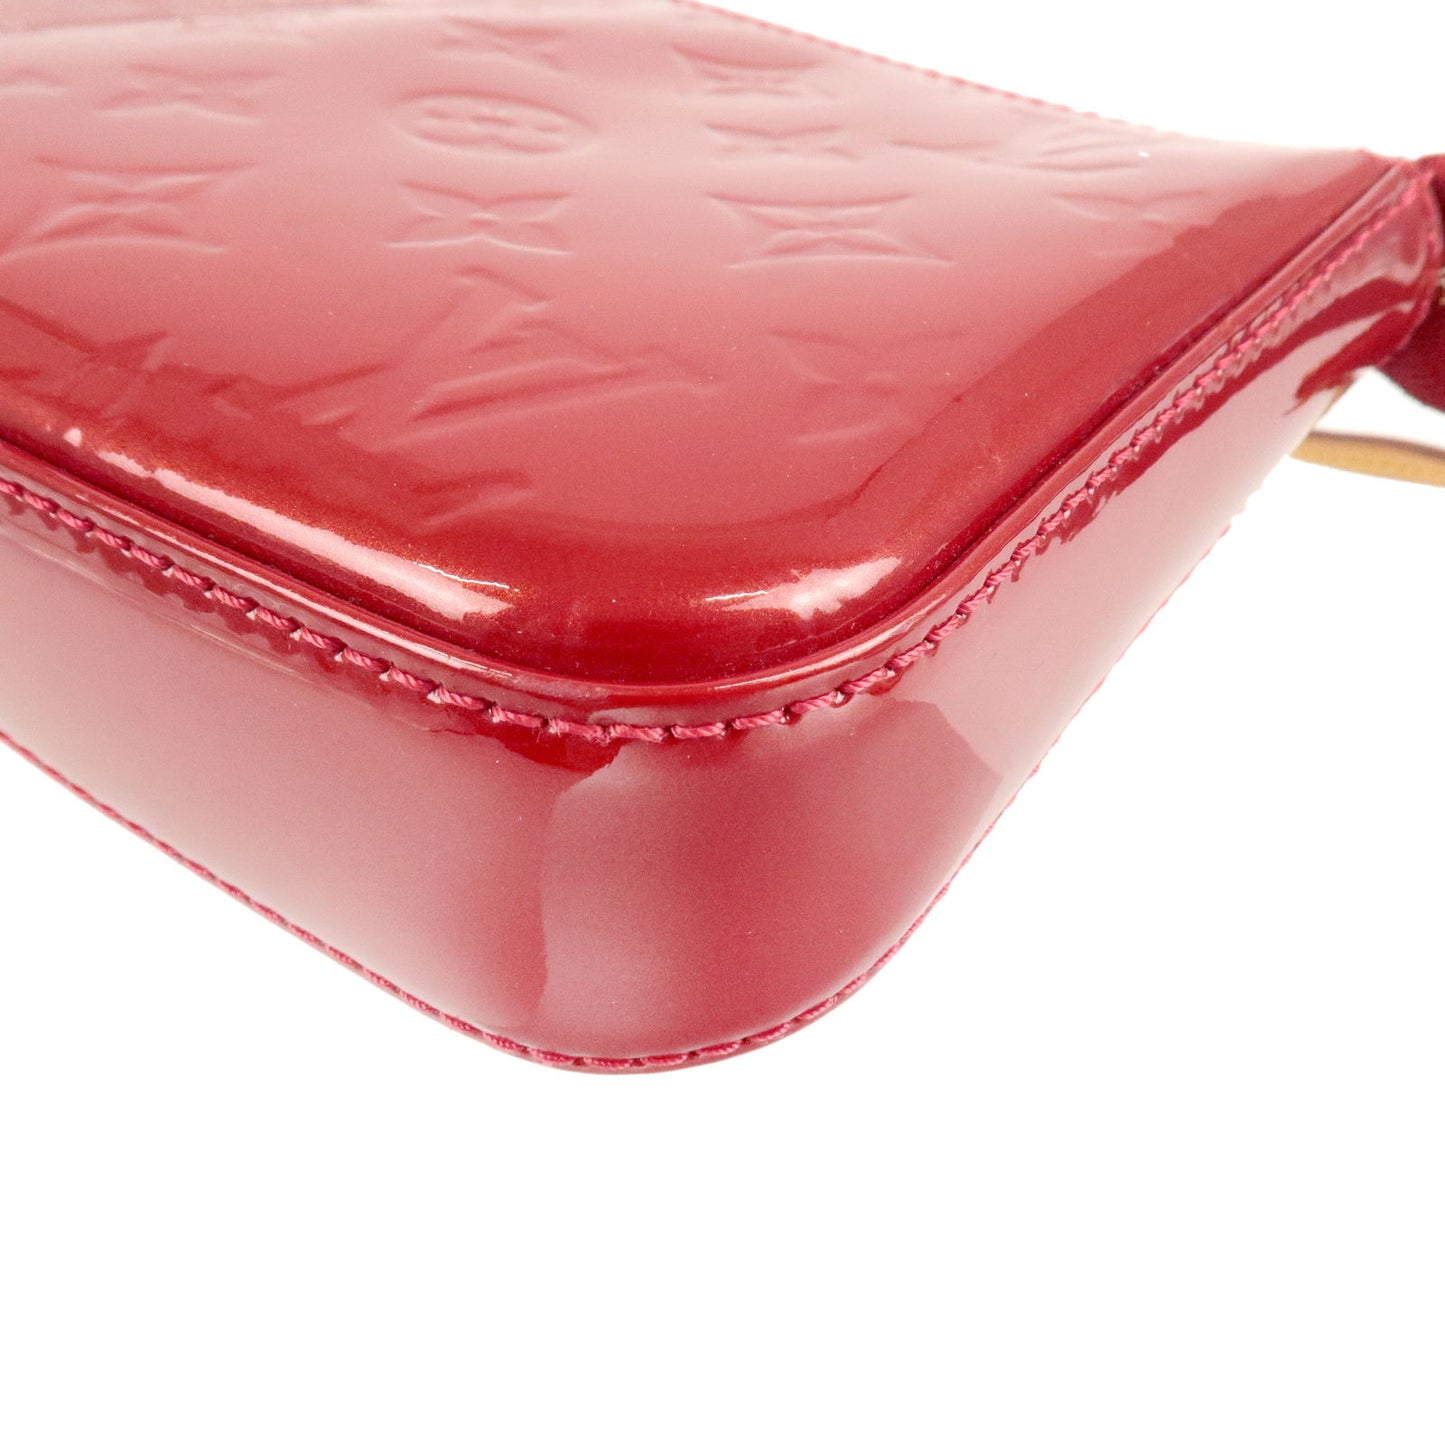 Louis Vuitton LV Vernis Clutch Accessories Pouch Red *MINT*